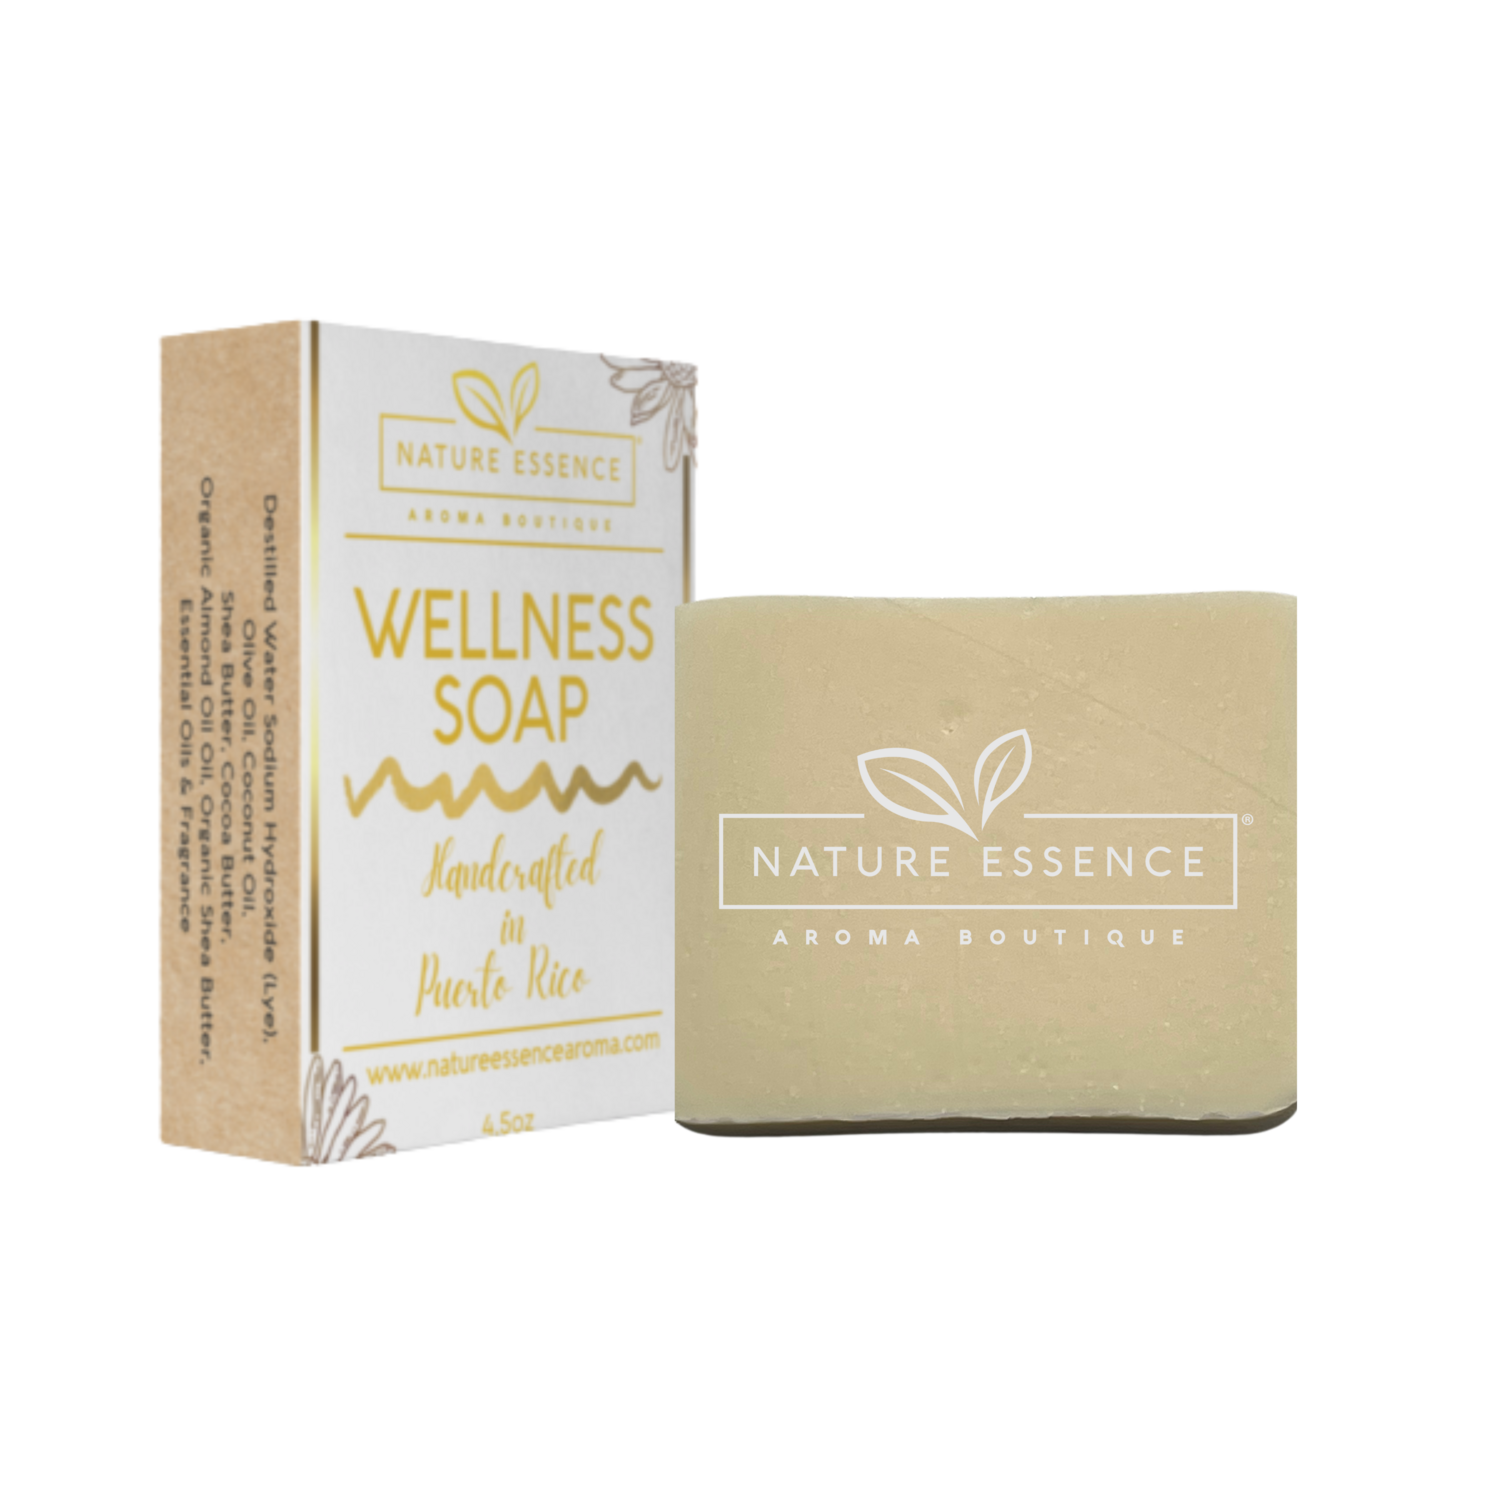 WELLNESS SOAP 4 X $24.99